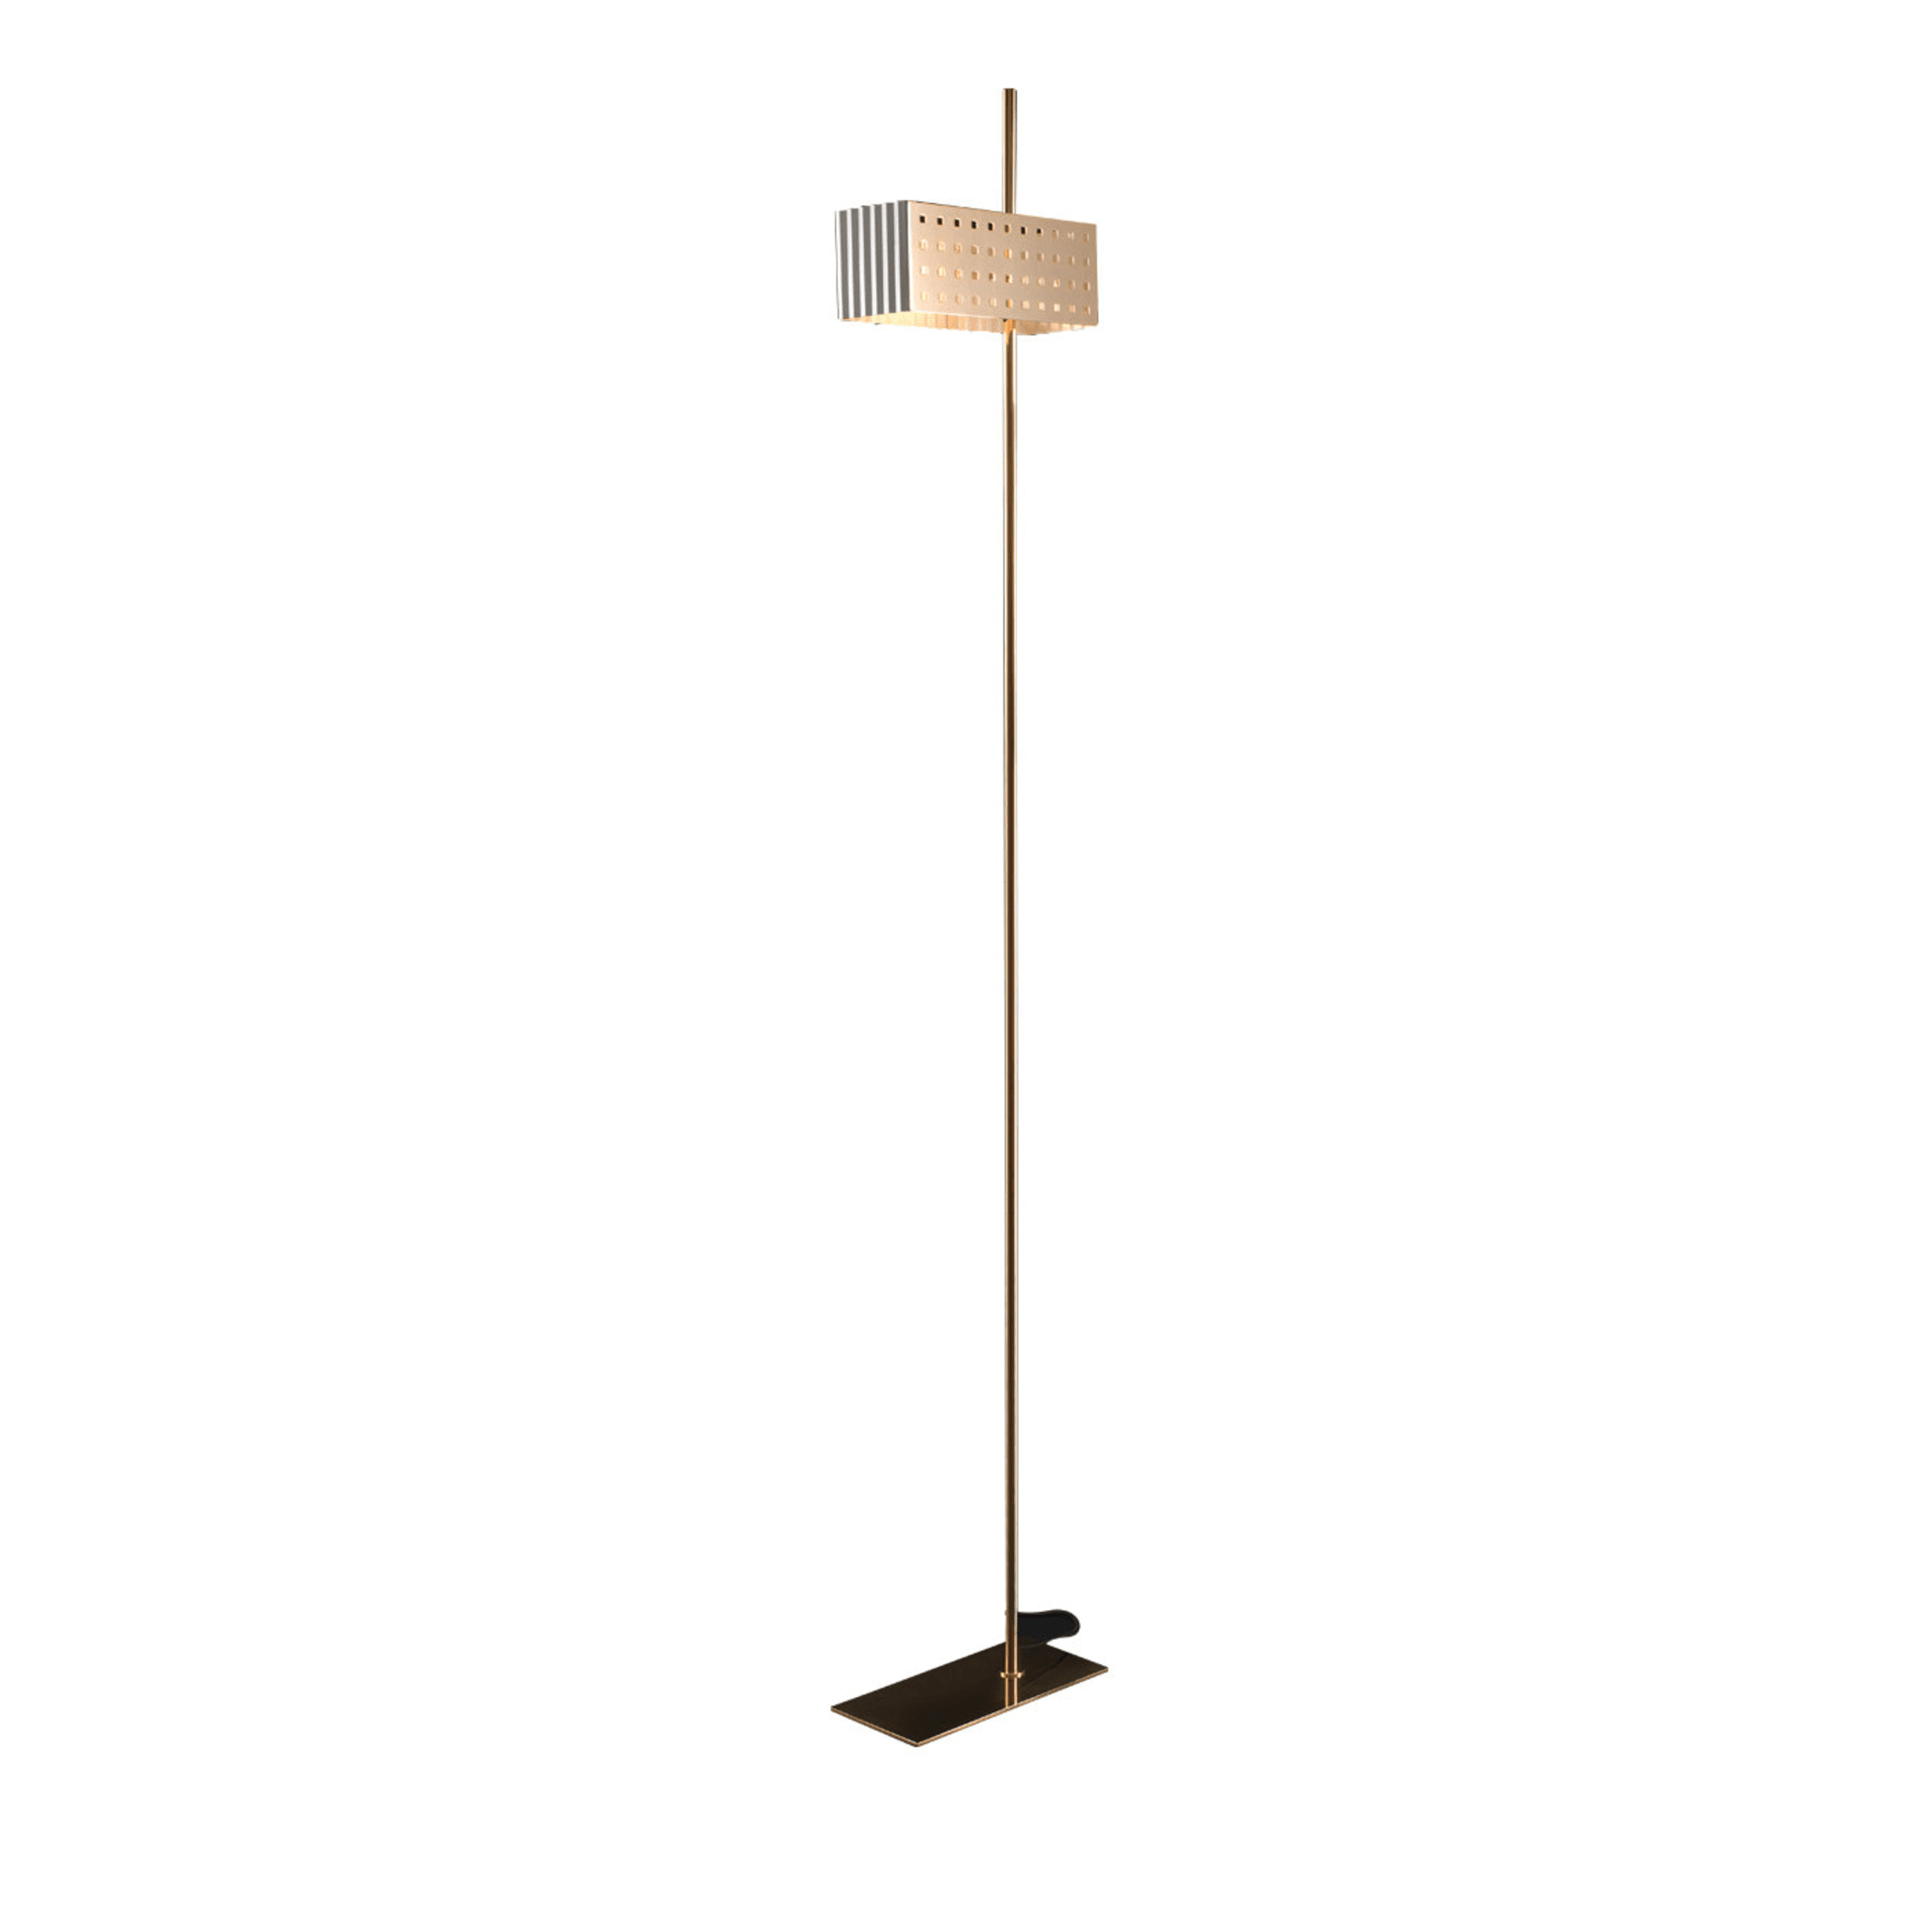 Wallie Tall Floor Lamp by Bozzoli - Main view